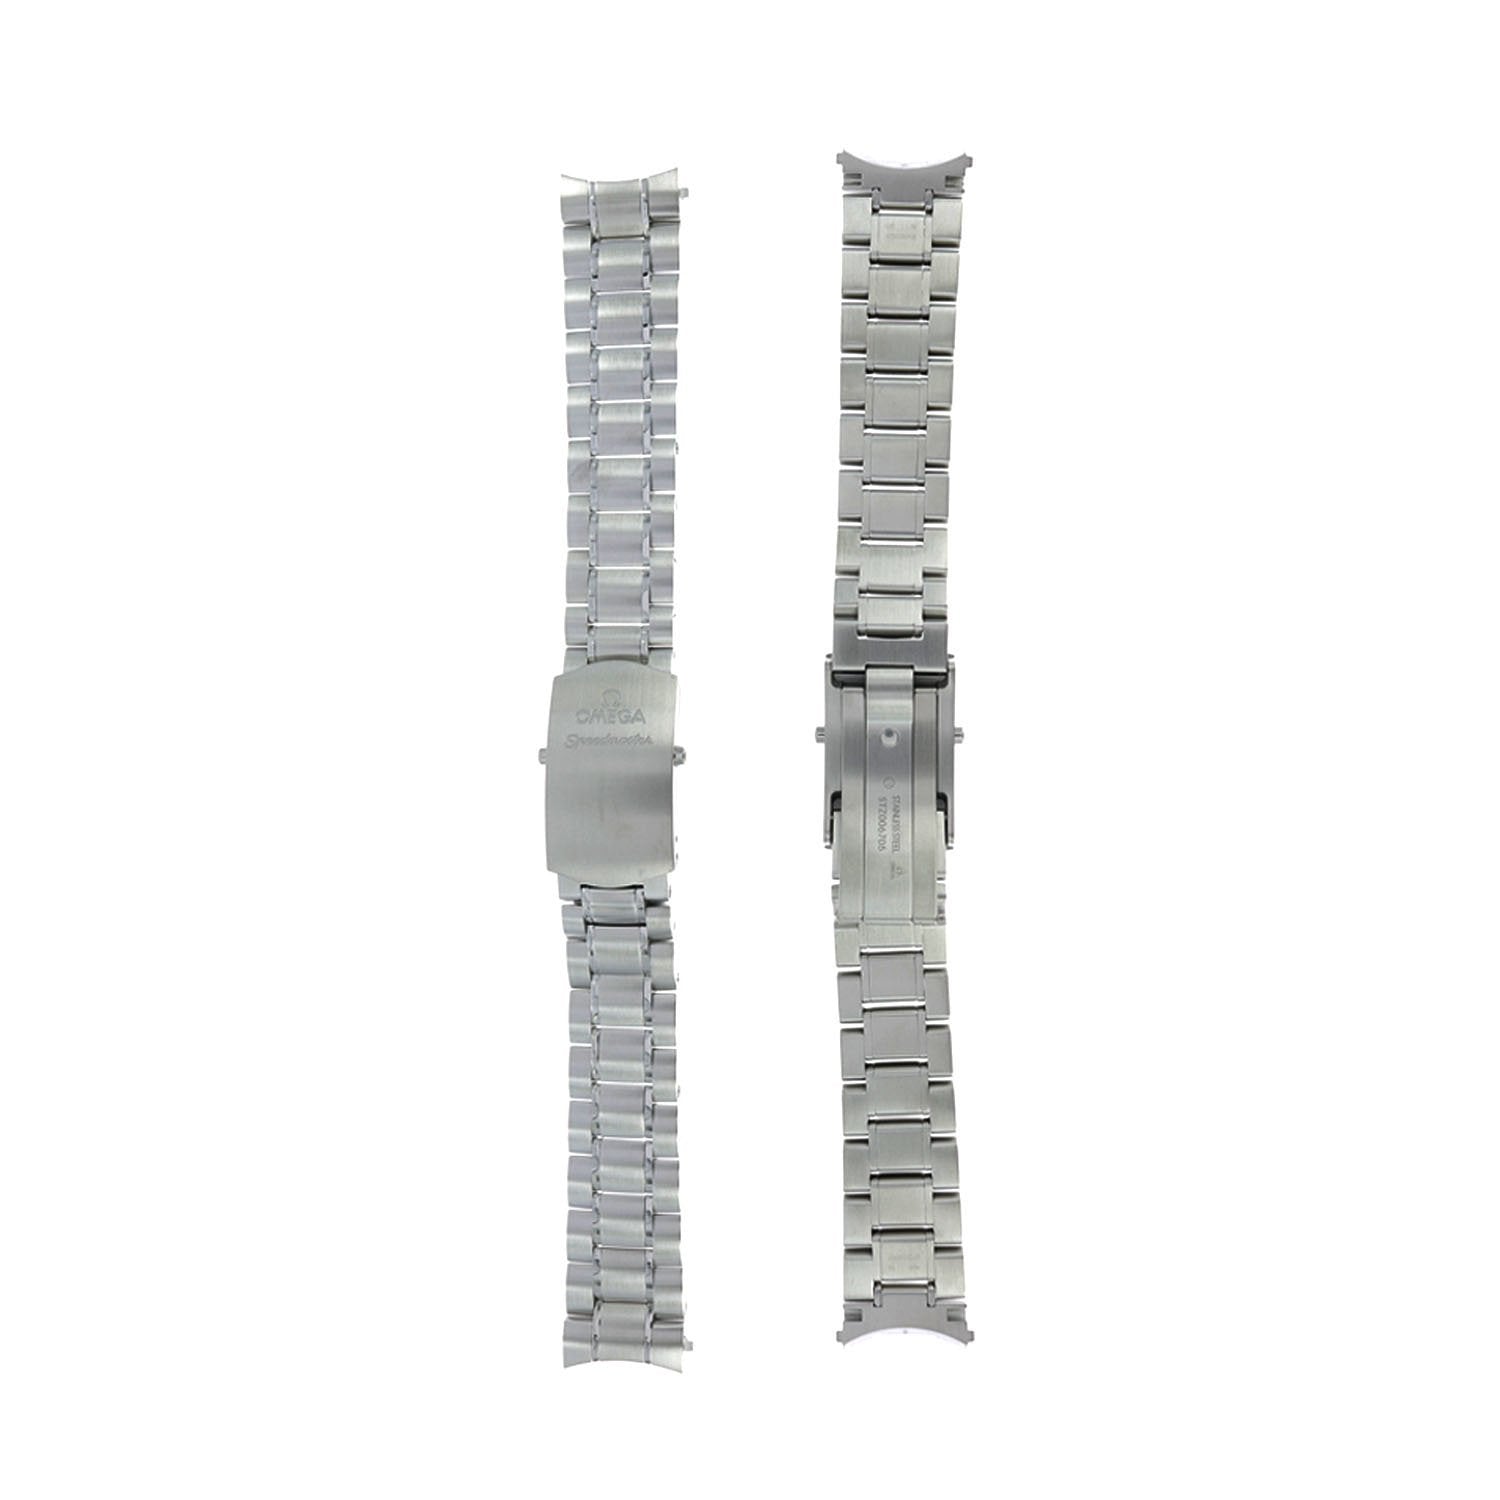 Amazoncom Omega 21mm x 16mm Beige Leather Watch Band Strap CUZ014662 GIA  65  Clothing Shoes  Jewelry